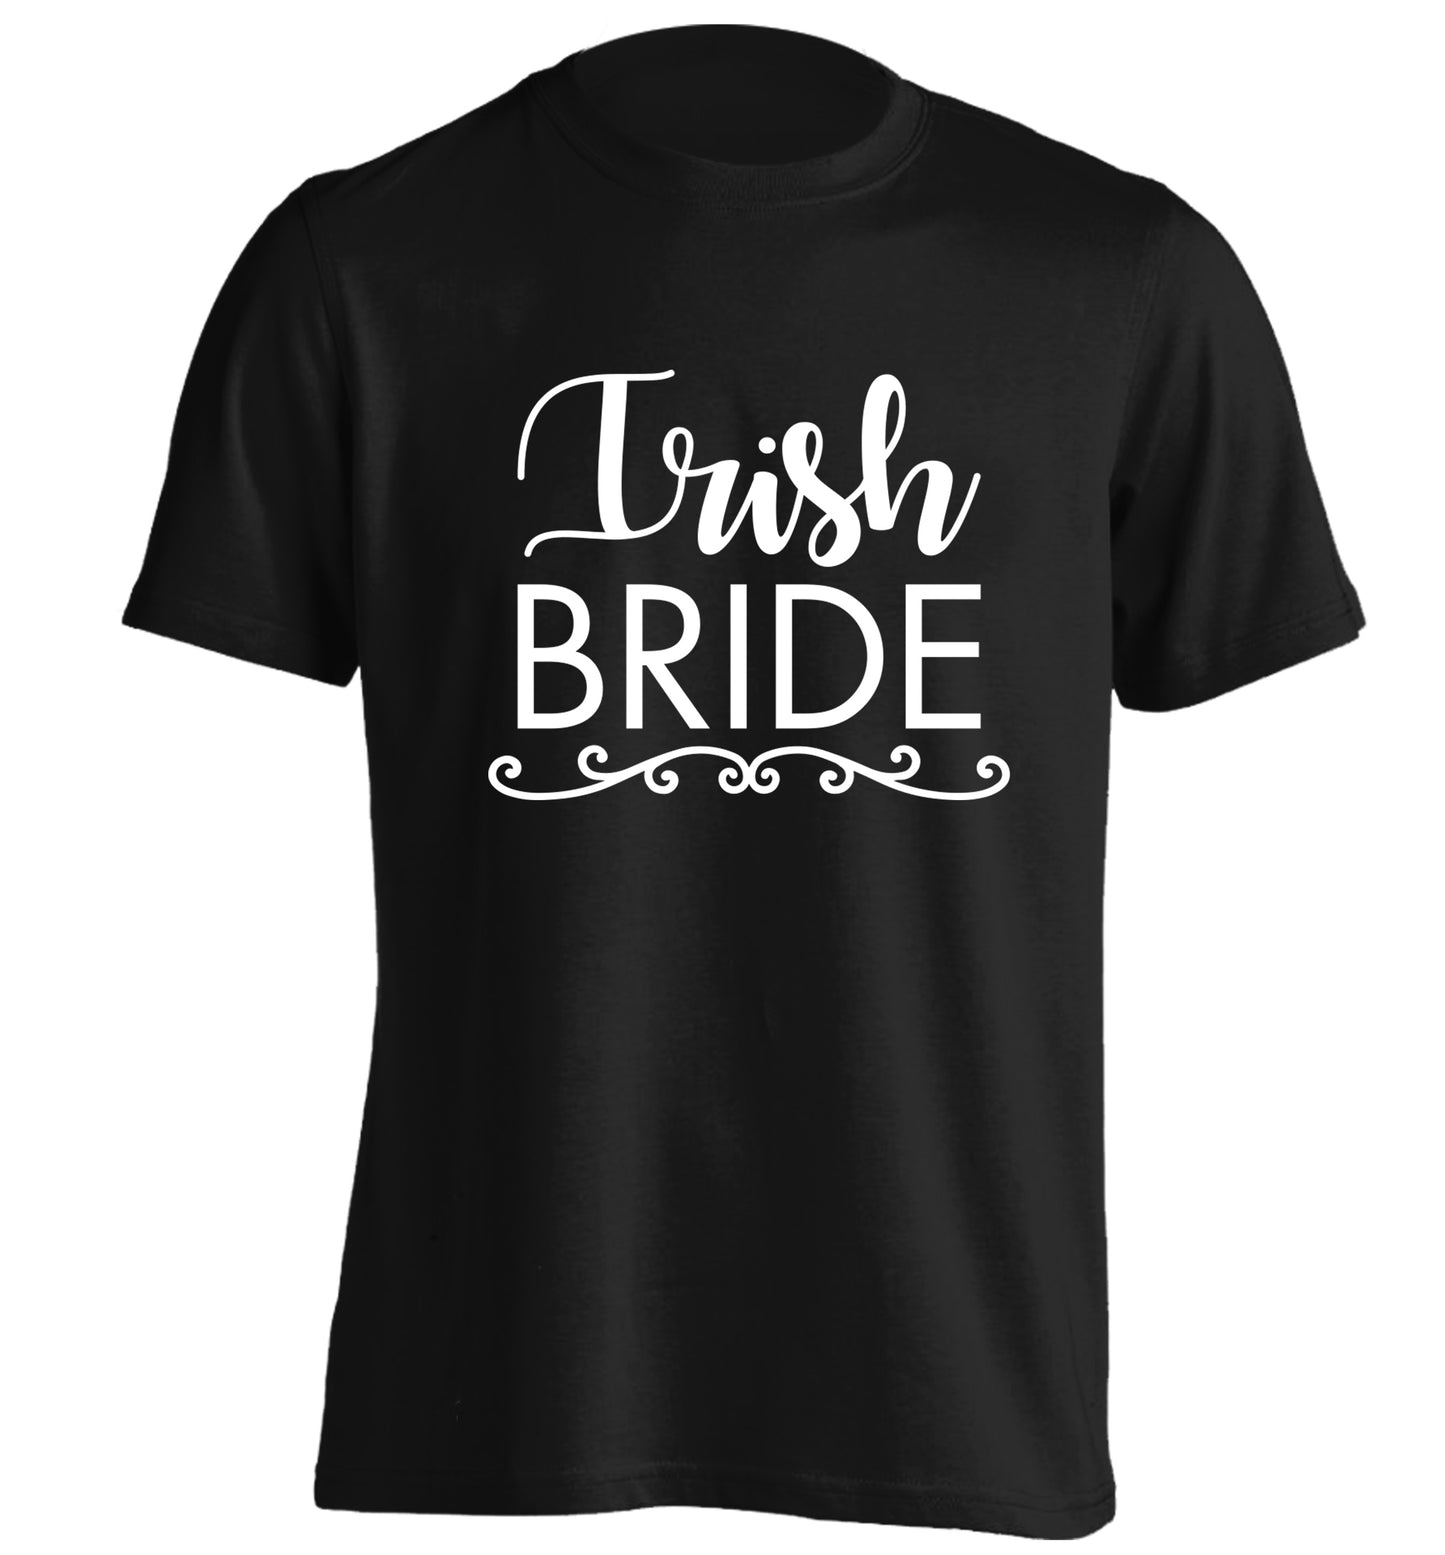 Irish bride adults unisex black Tshirt 2XL